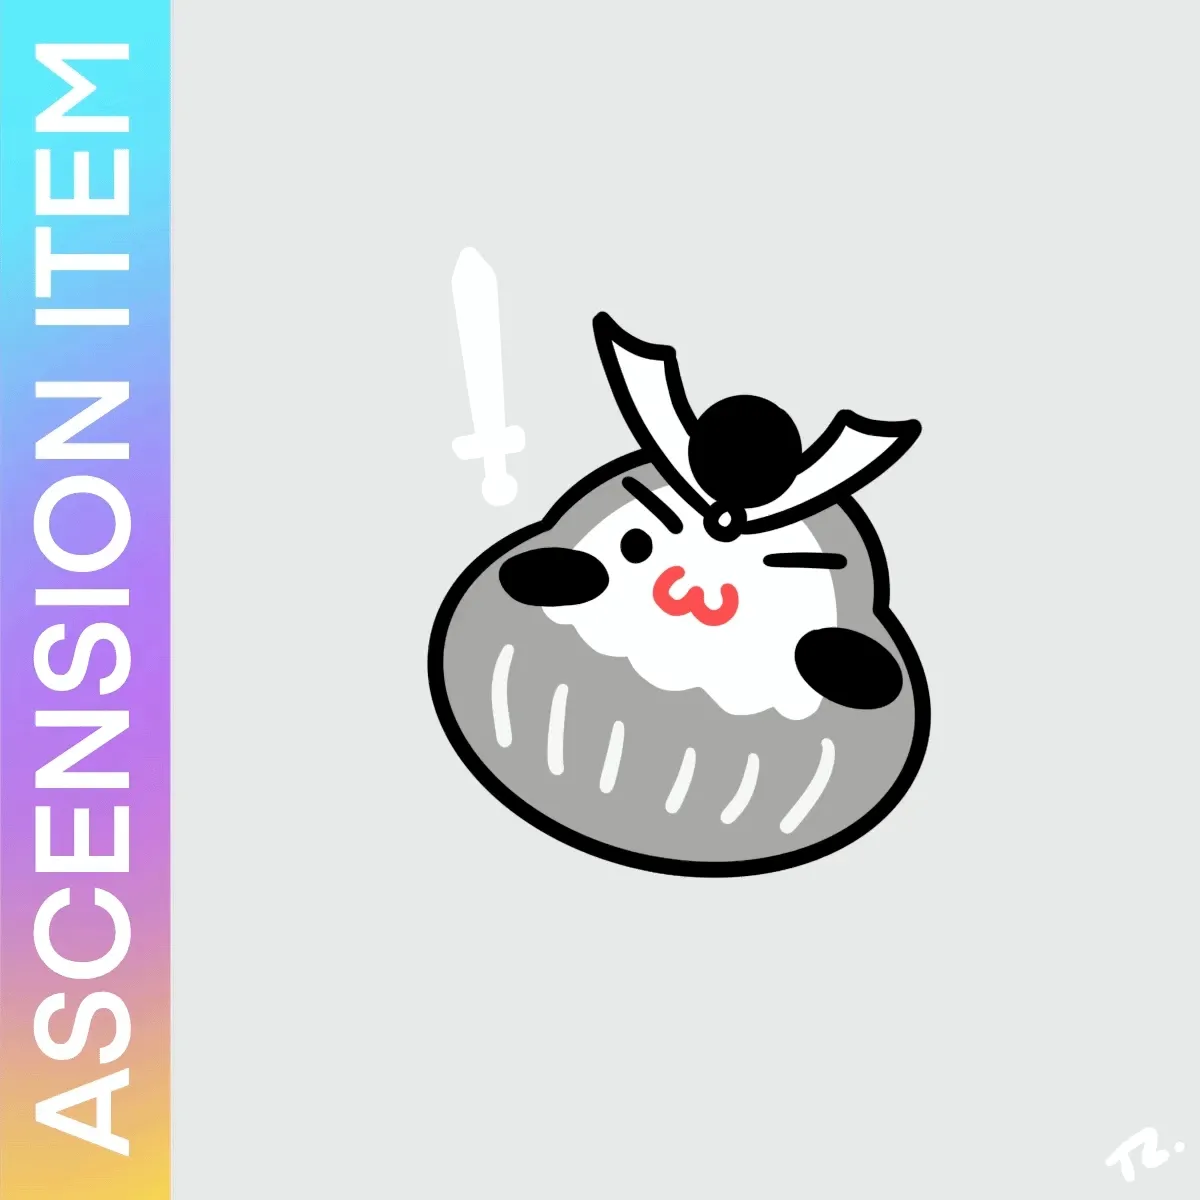 #13 - Ascension Item: Justice [Manekirei Shop]